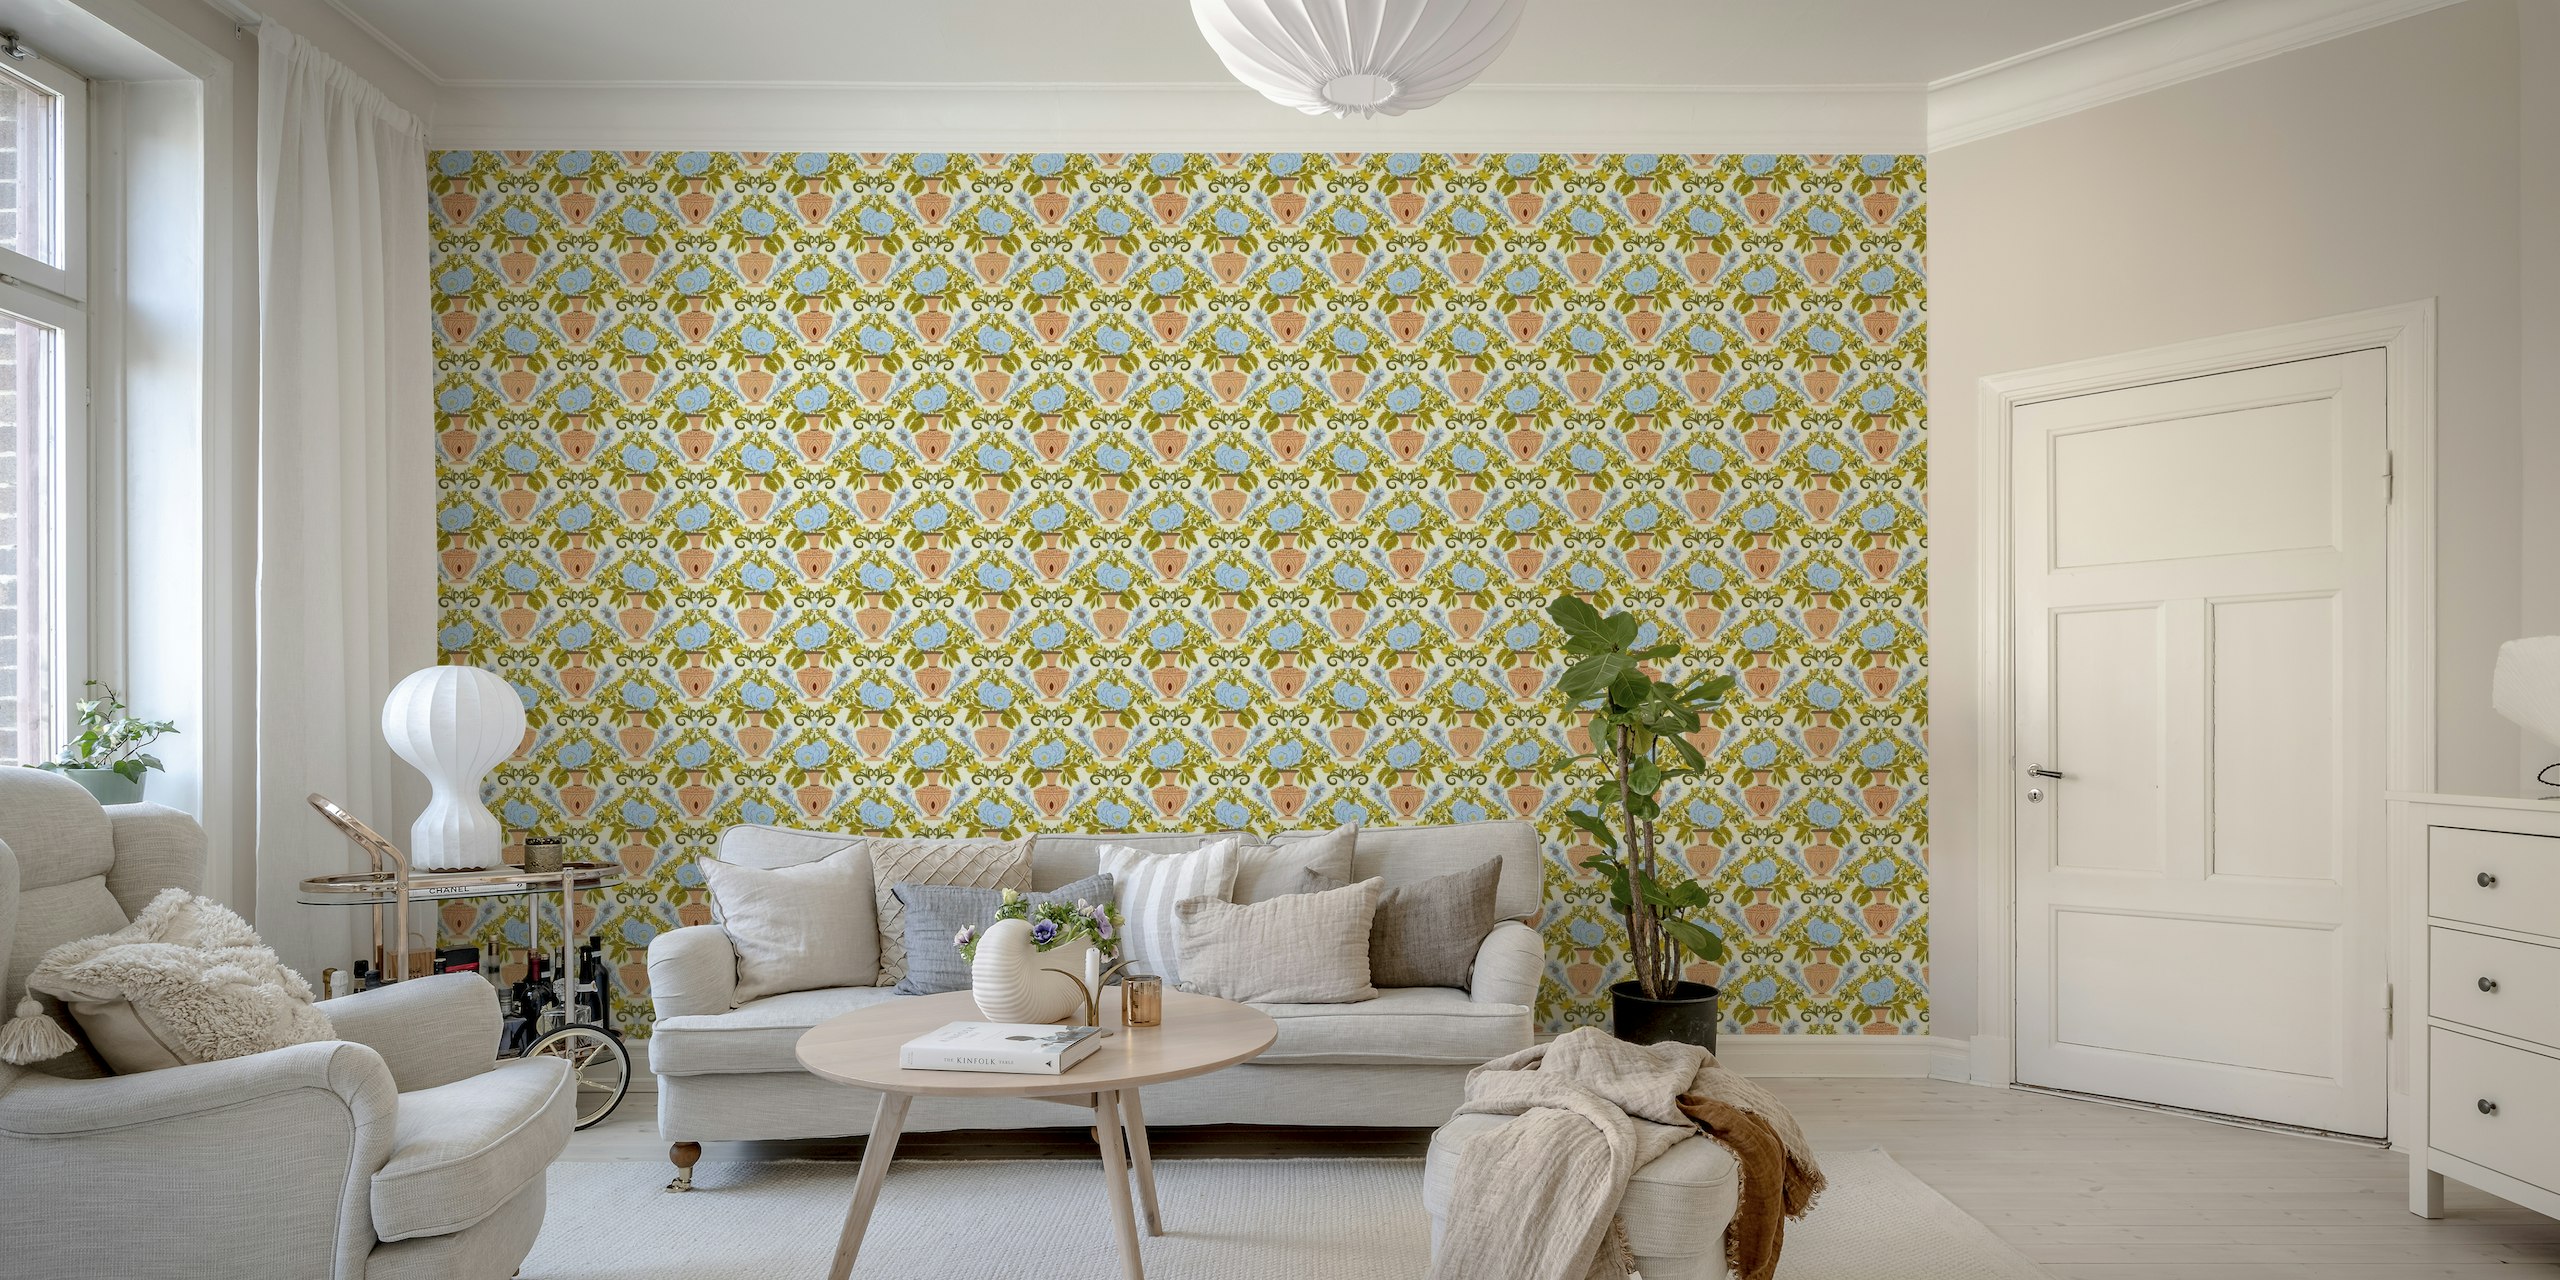 Italian Villa Wallpaper with citrus fruits papel pintado